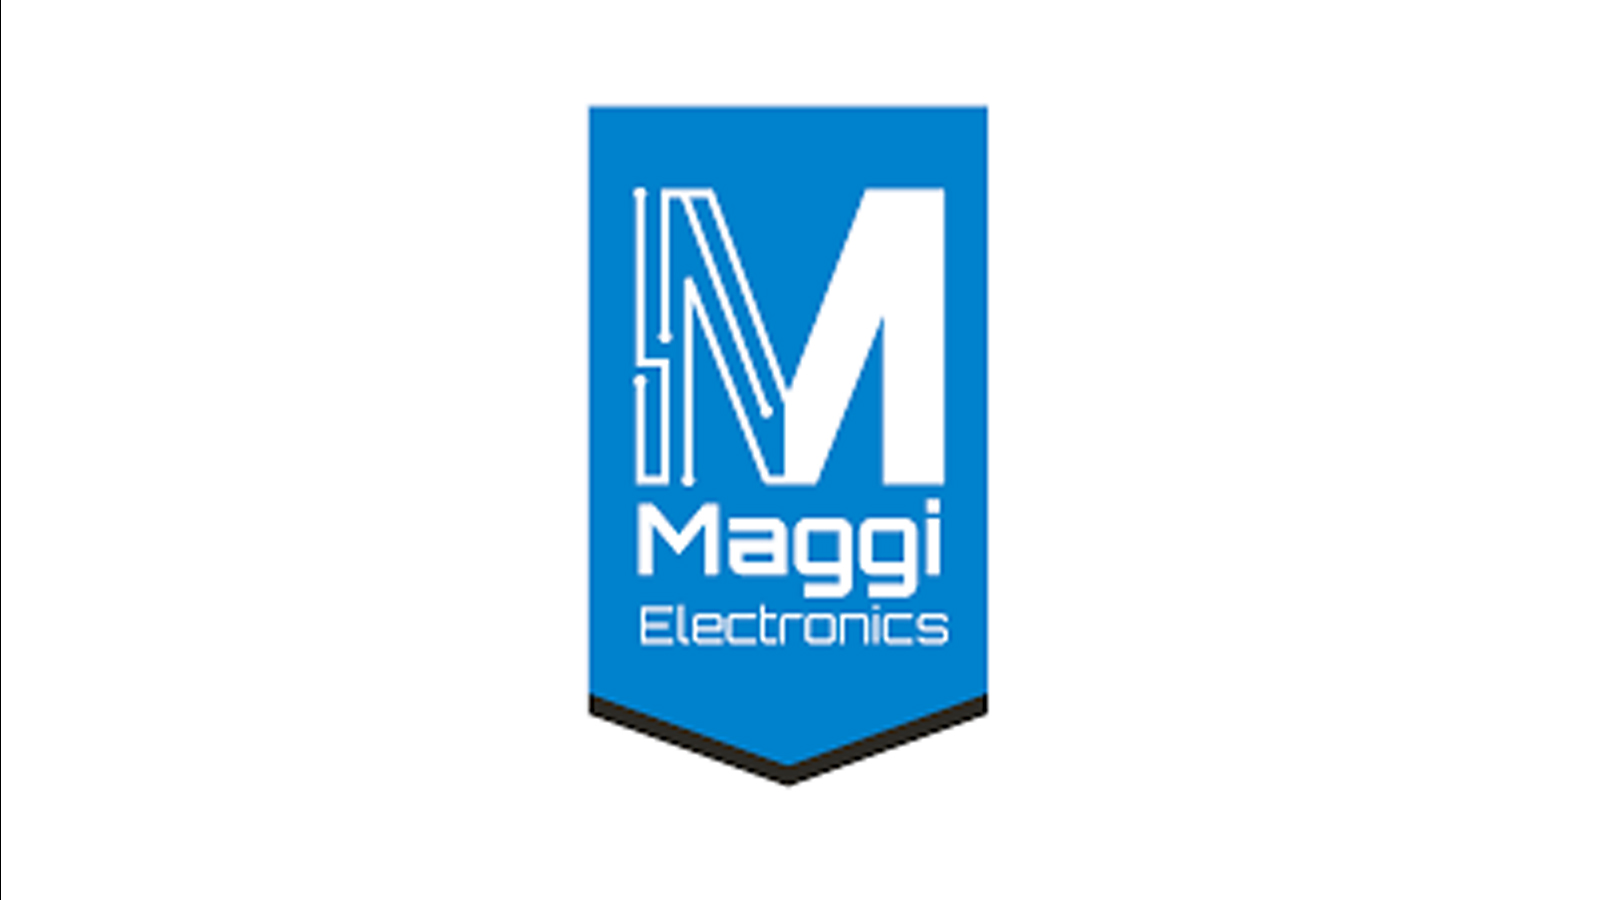 Maggi Electronics